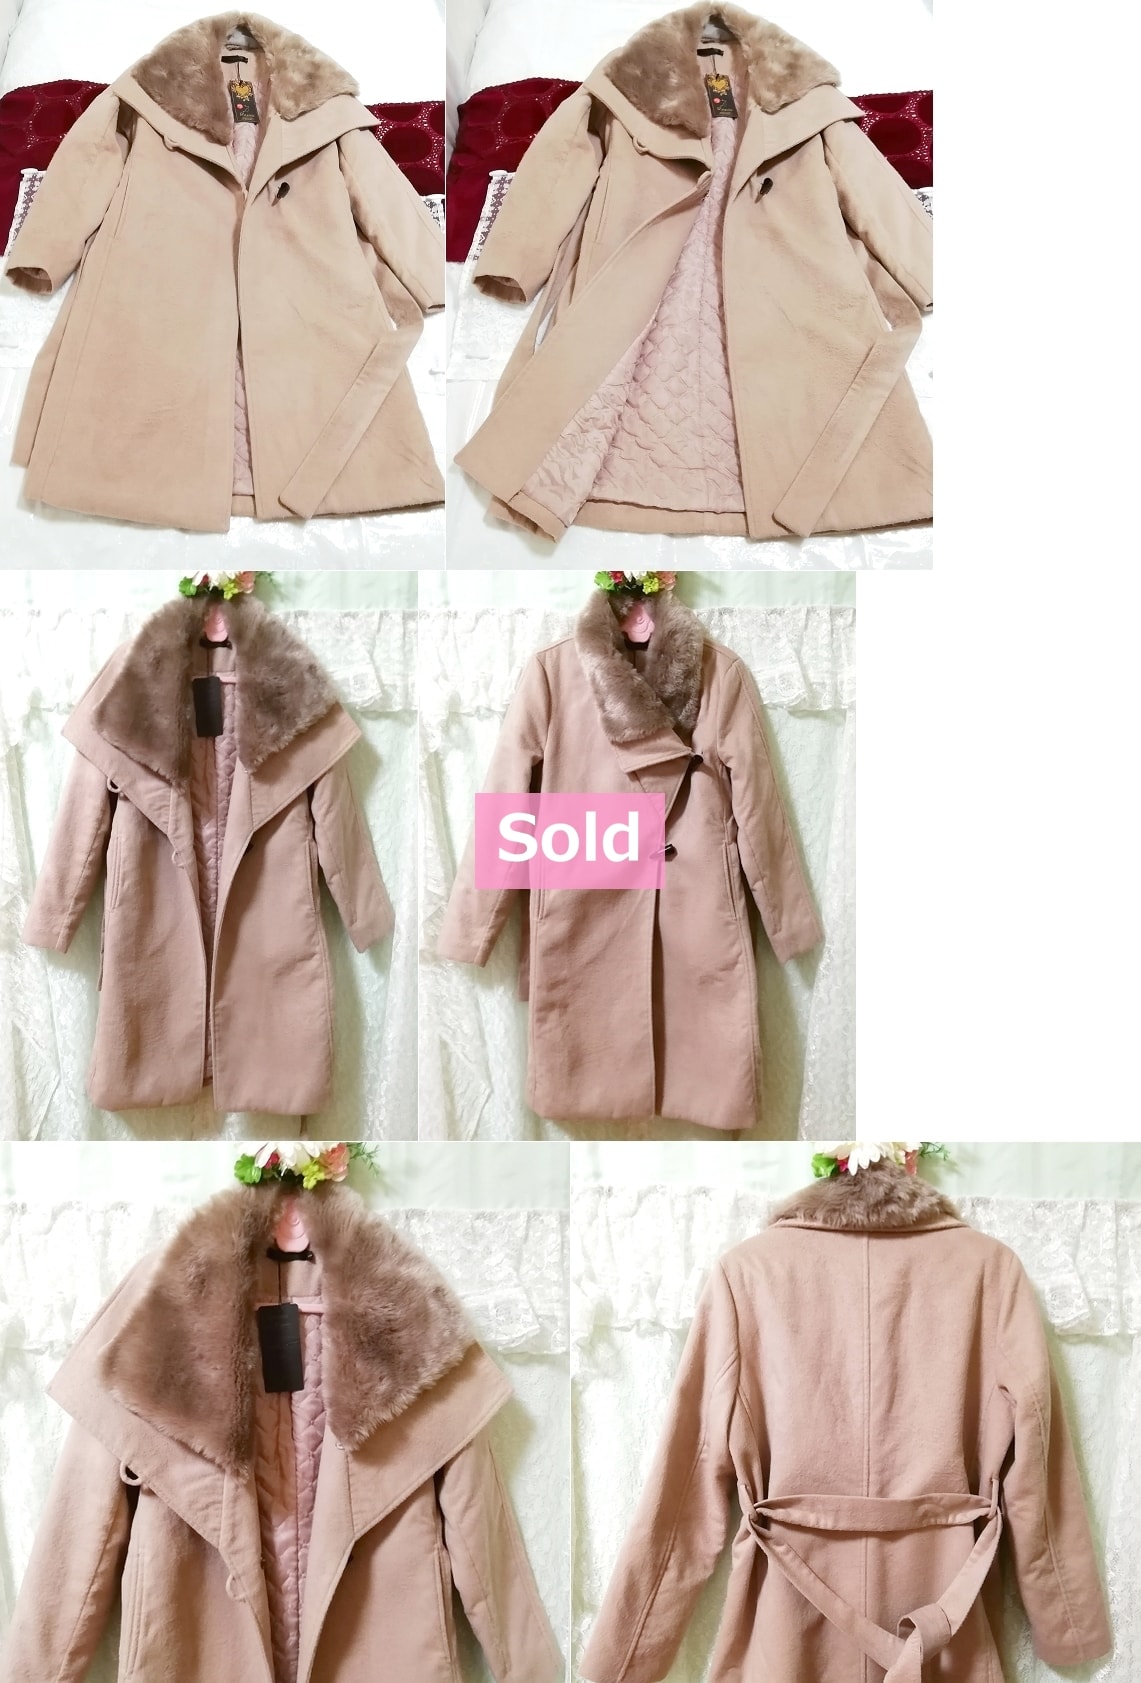 Daysiec ピンクベージュタグ付きロングコート Long coat with pink beige tag, コート&コート一般&Mサイズ